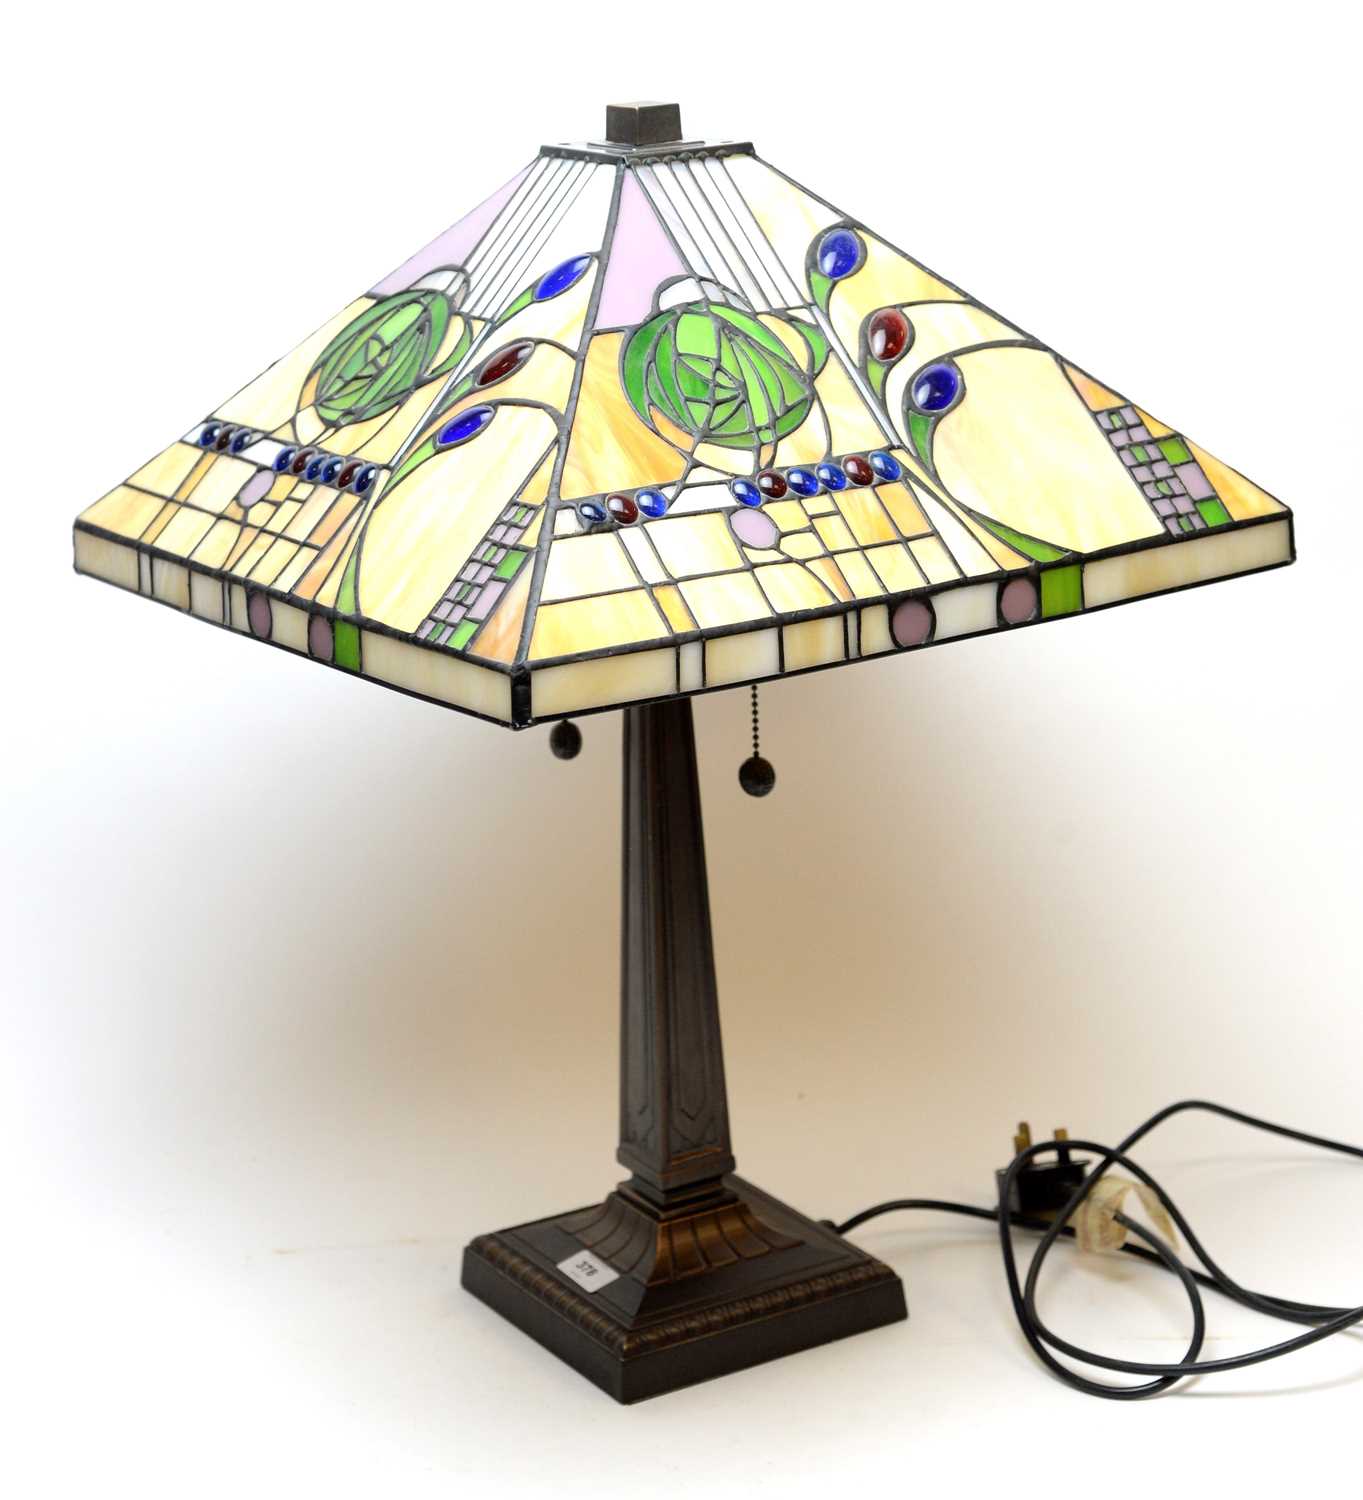 20th century Tiffany style table lamp